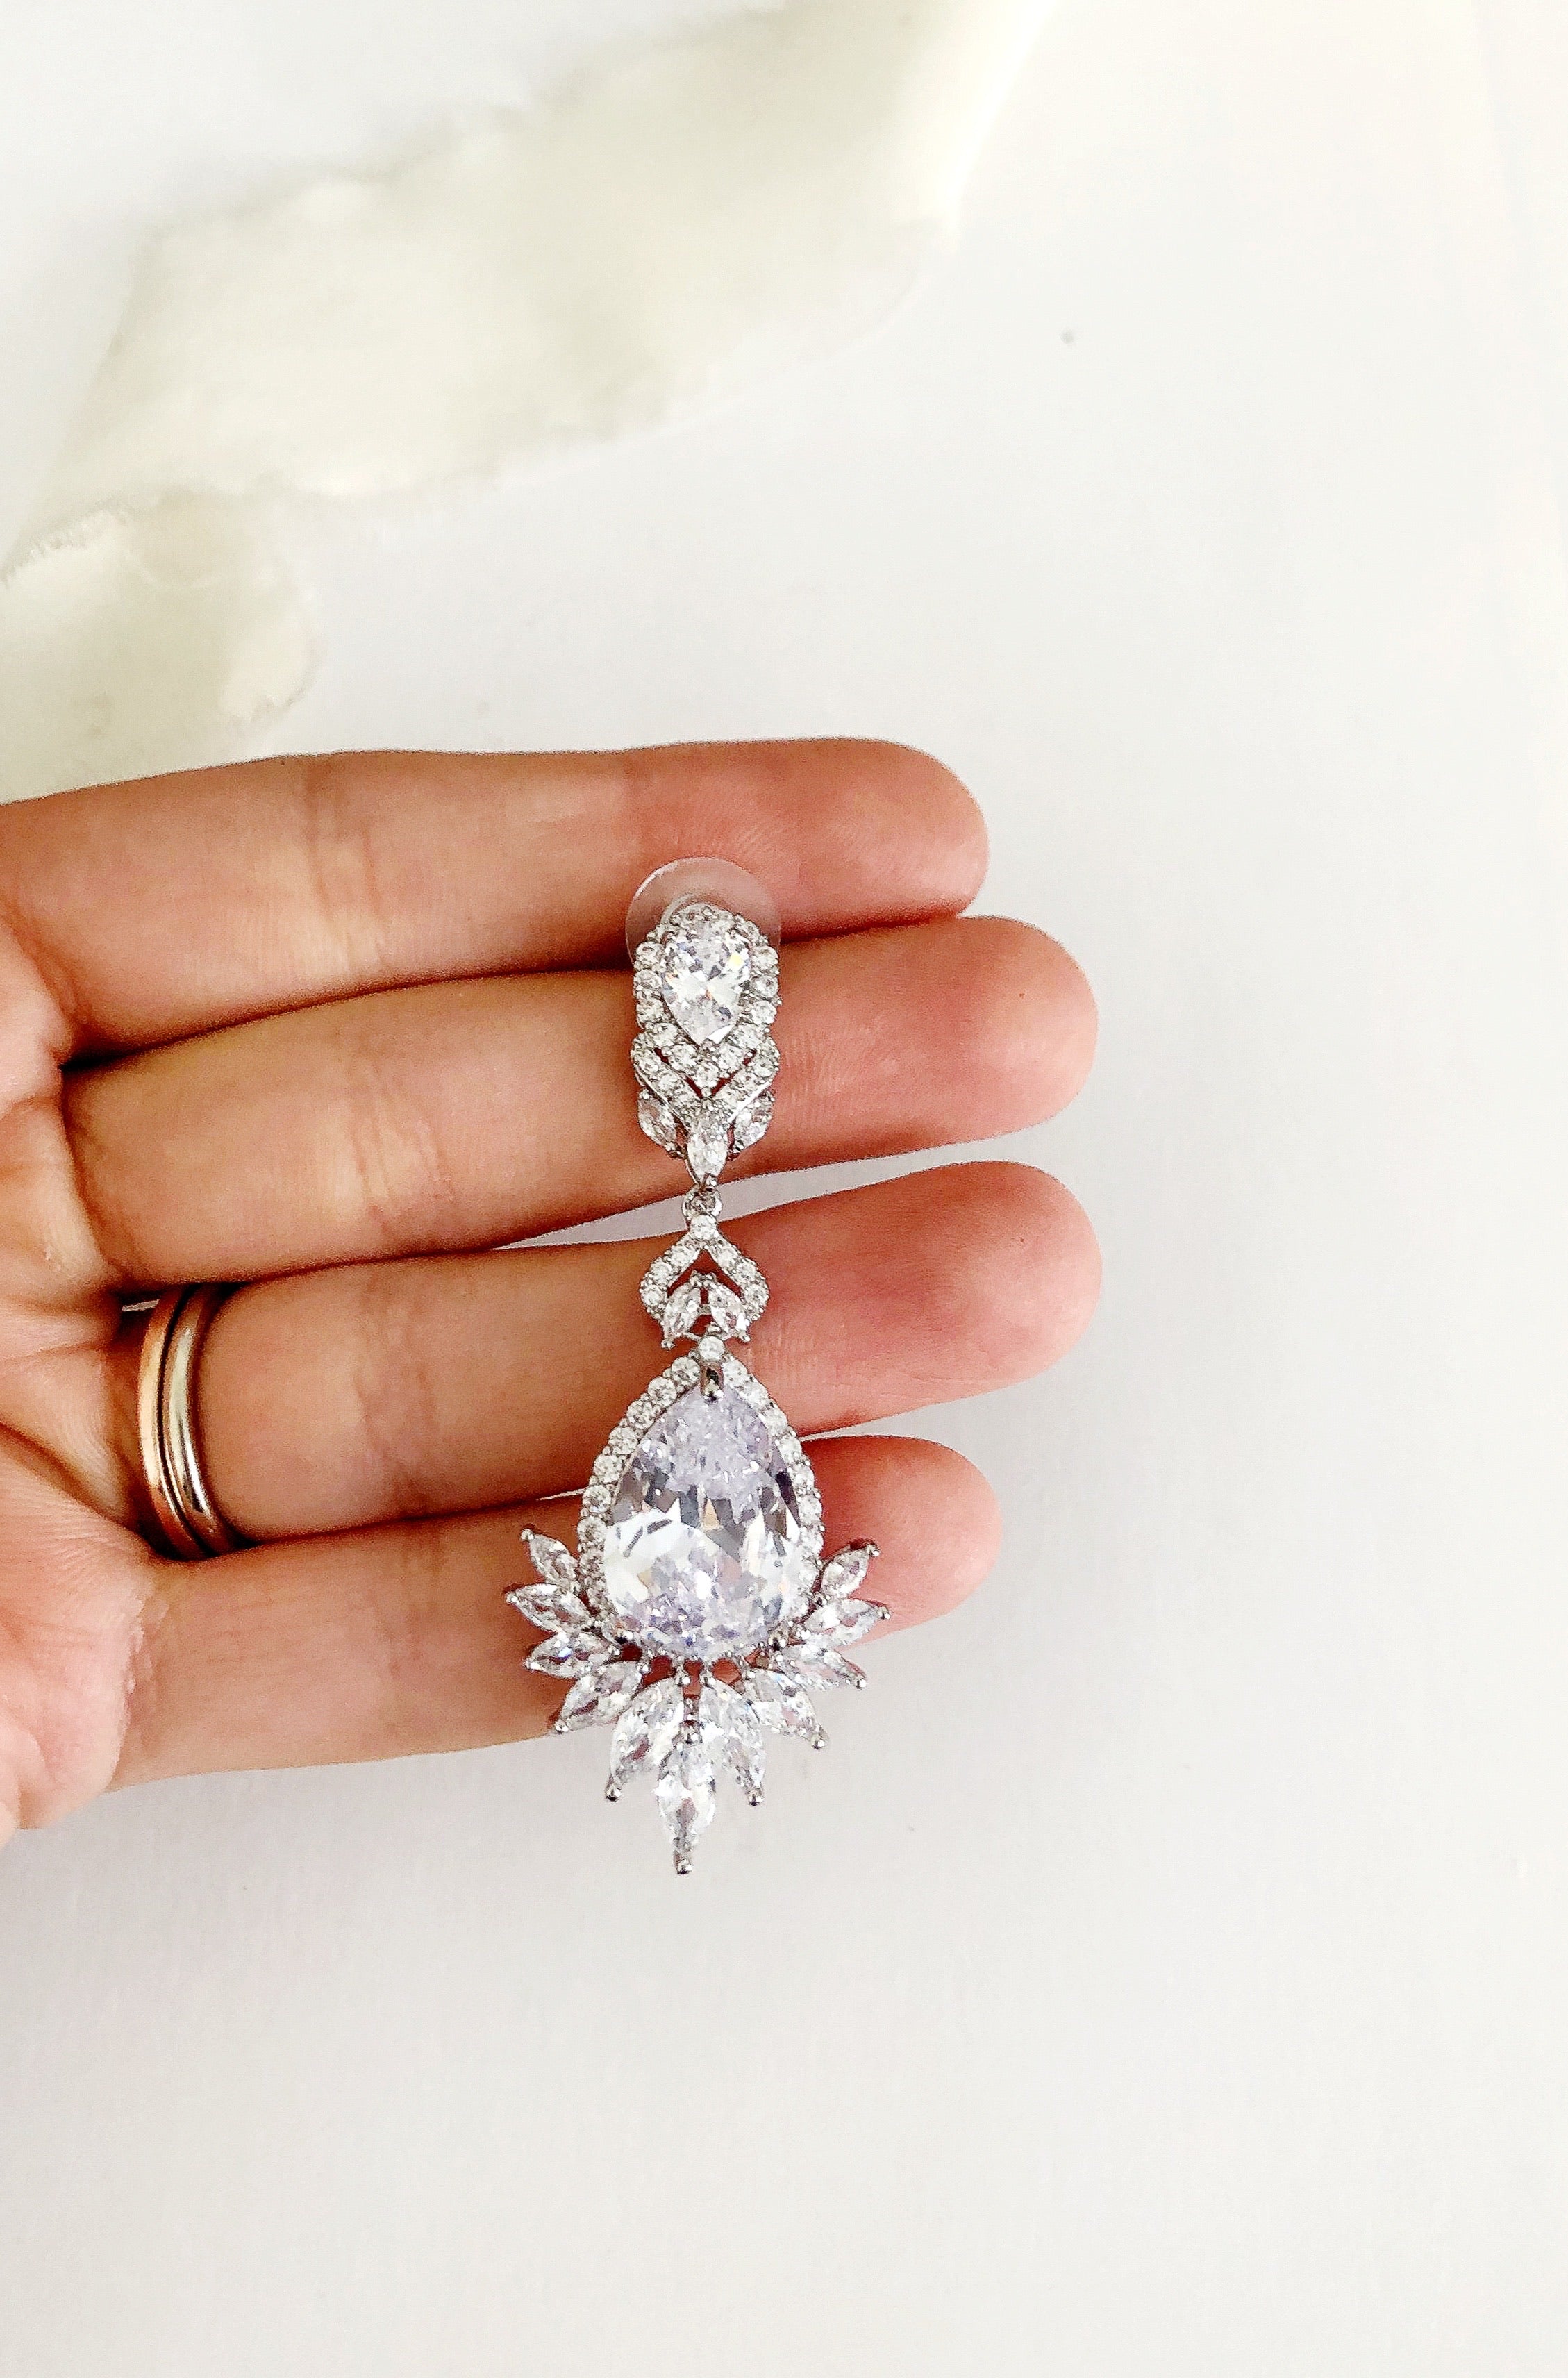 Priscilla Long Silver Diamond Statement Wedding Earrings